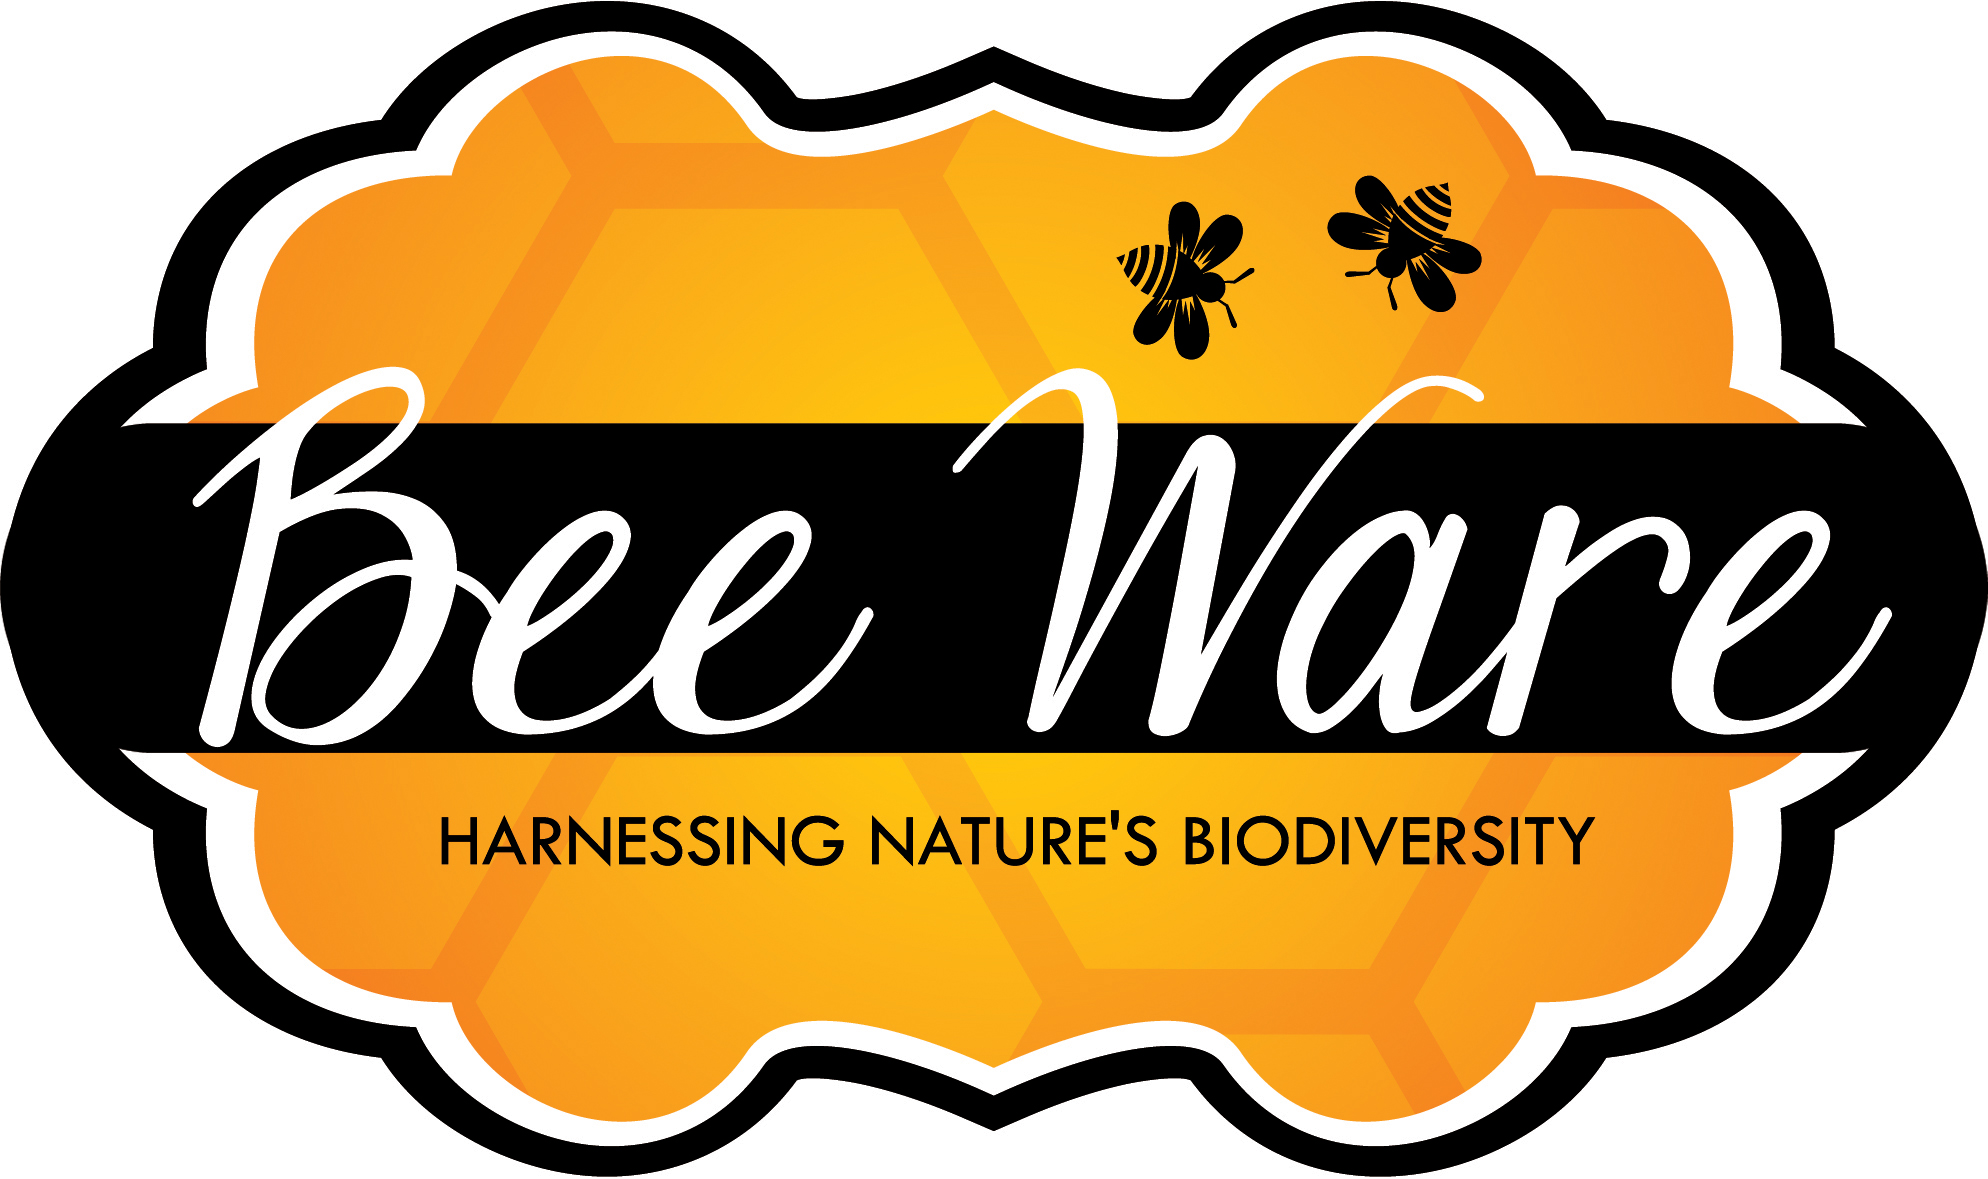 http://www.beeware.co.za - Bee Ware Shop